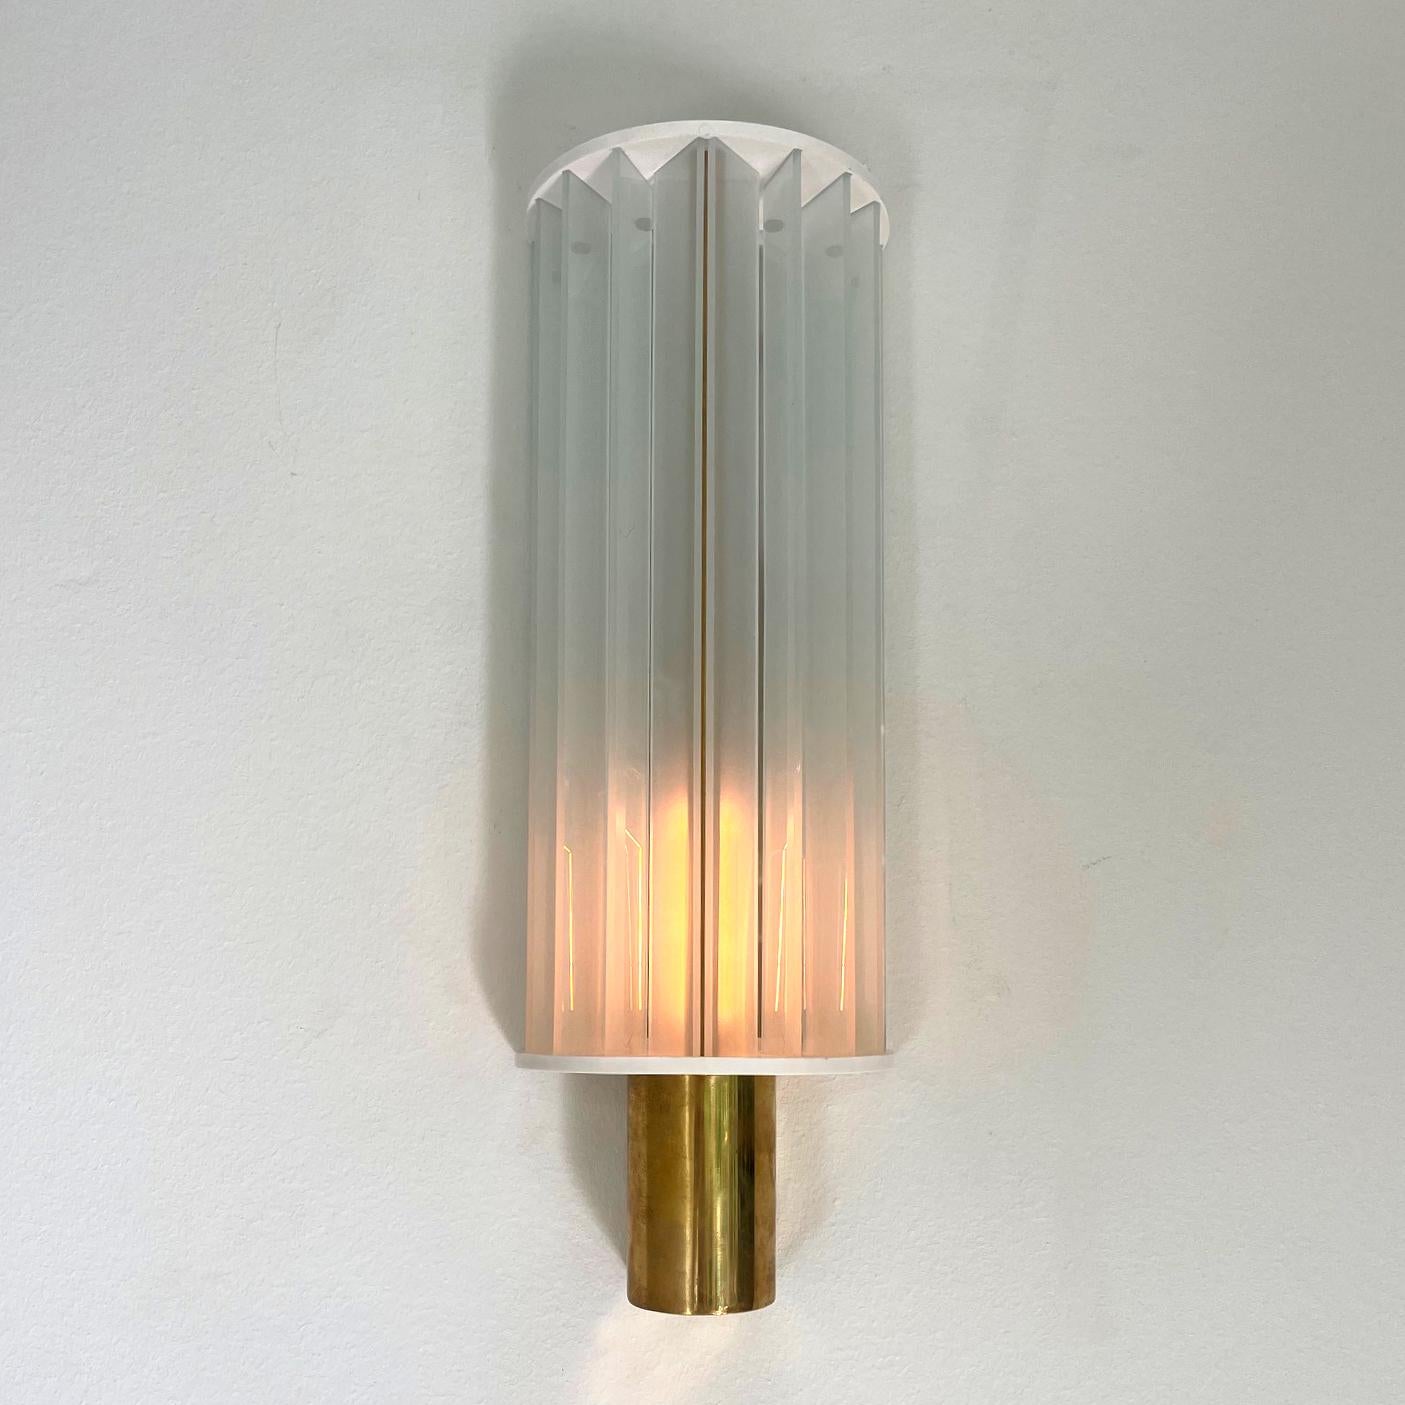 Danish Poul Henningsen, Rare Pair of Elongated Wall Lamps, Scandinavan Modern, 1940s  For Sale